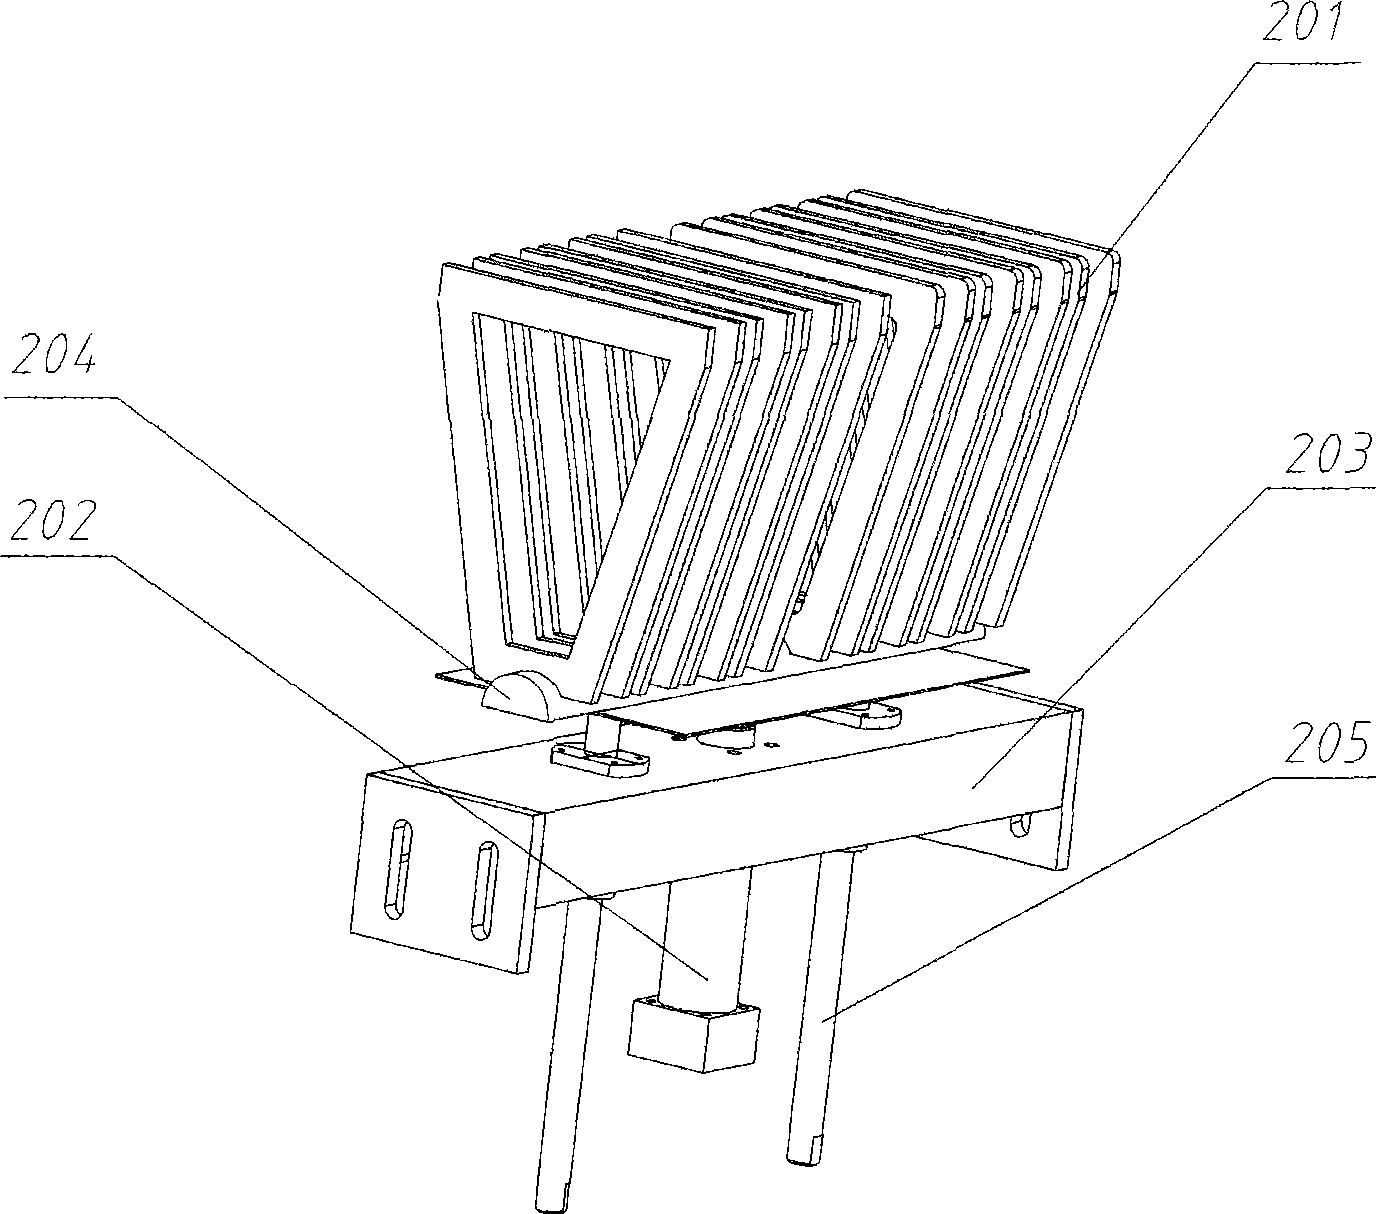 Vertical code clamping machine